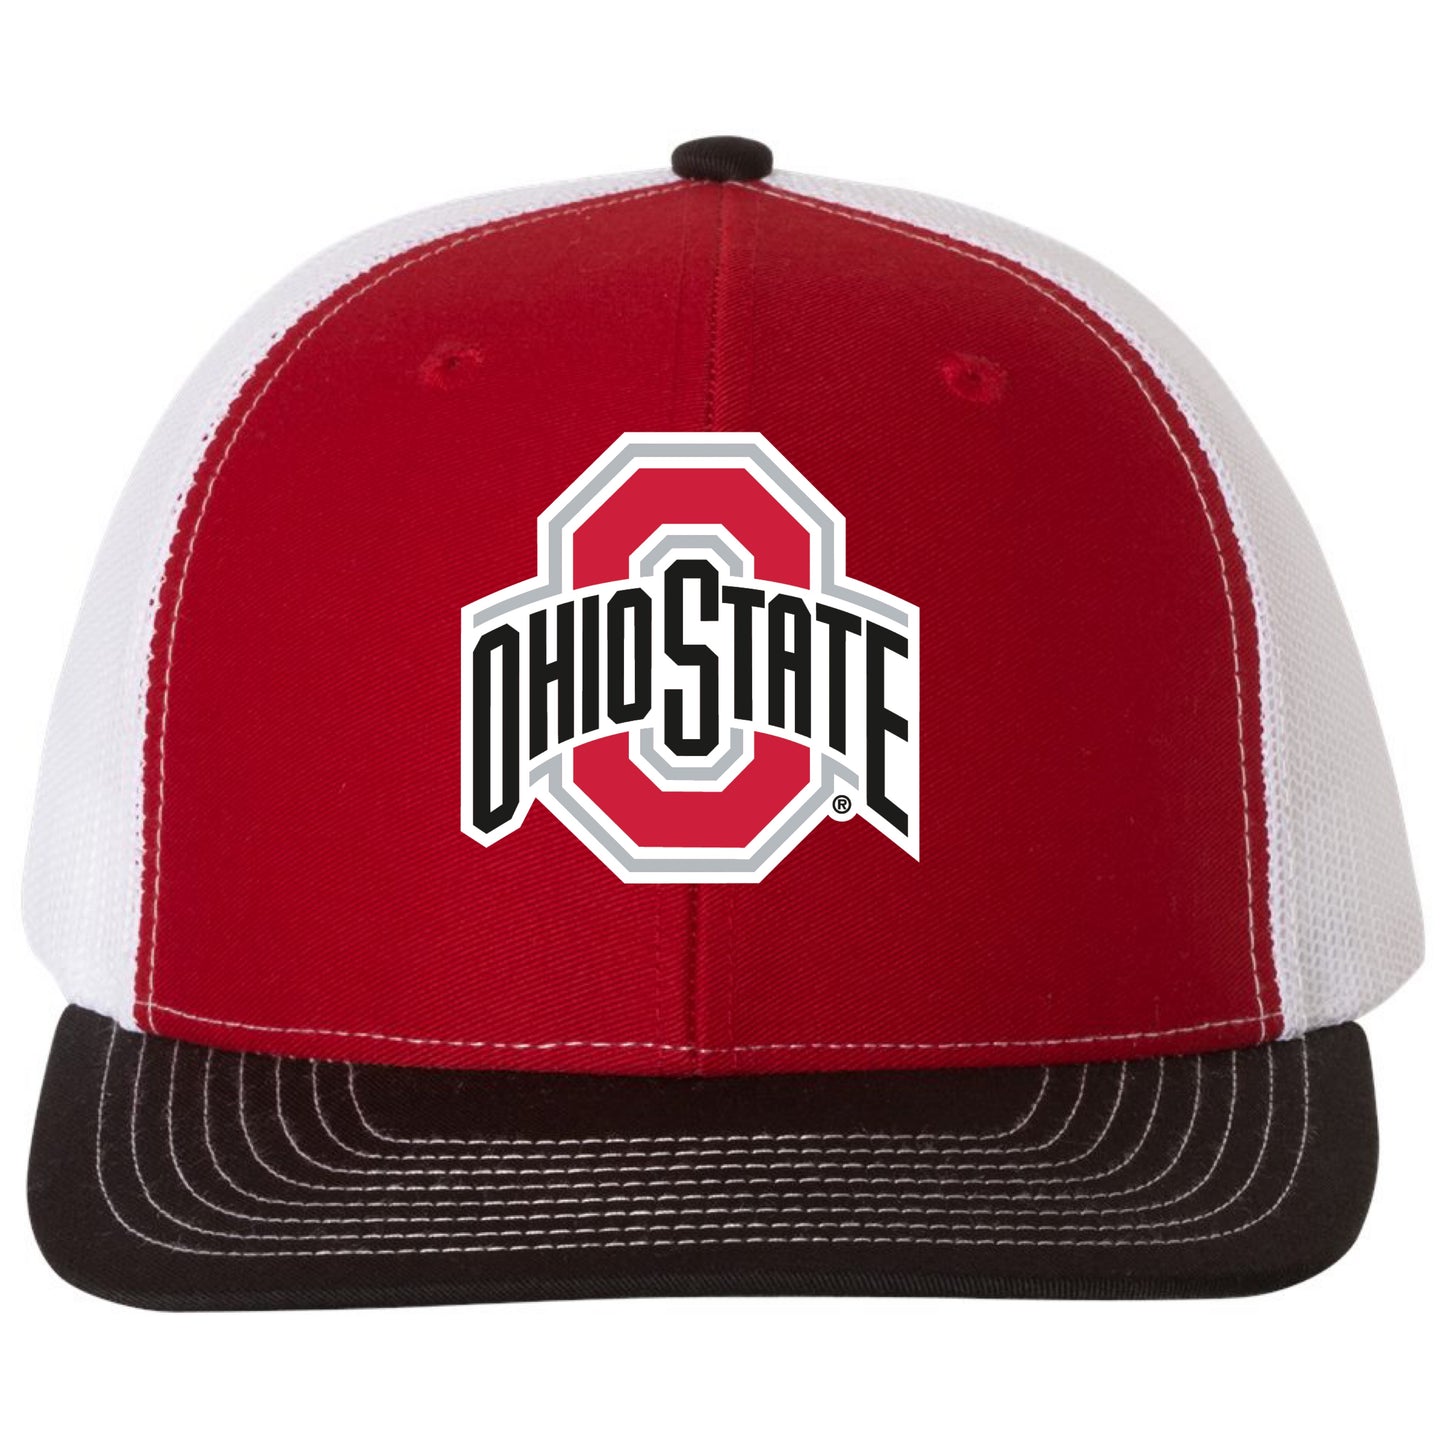 Ohio State Buckeyes 3D Snapback Trucker Hat- Red/ White/ Black - Ten Gallon Hat Co.